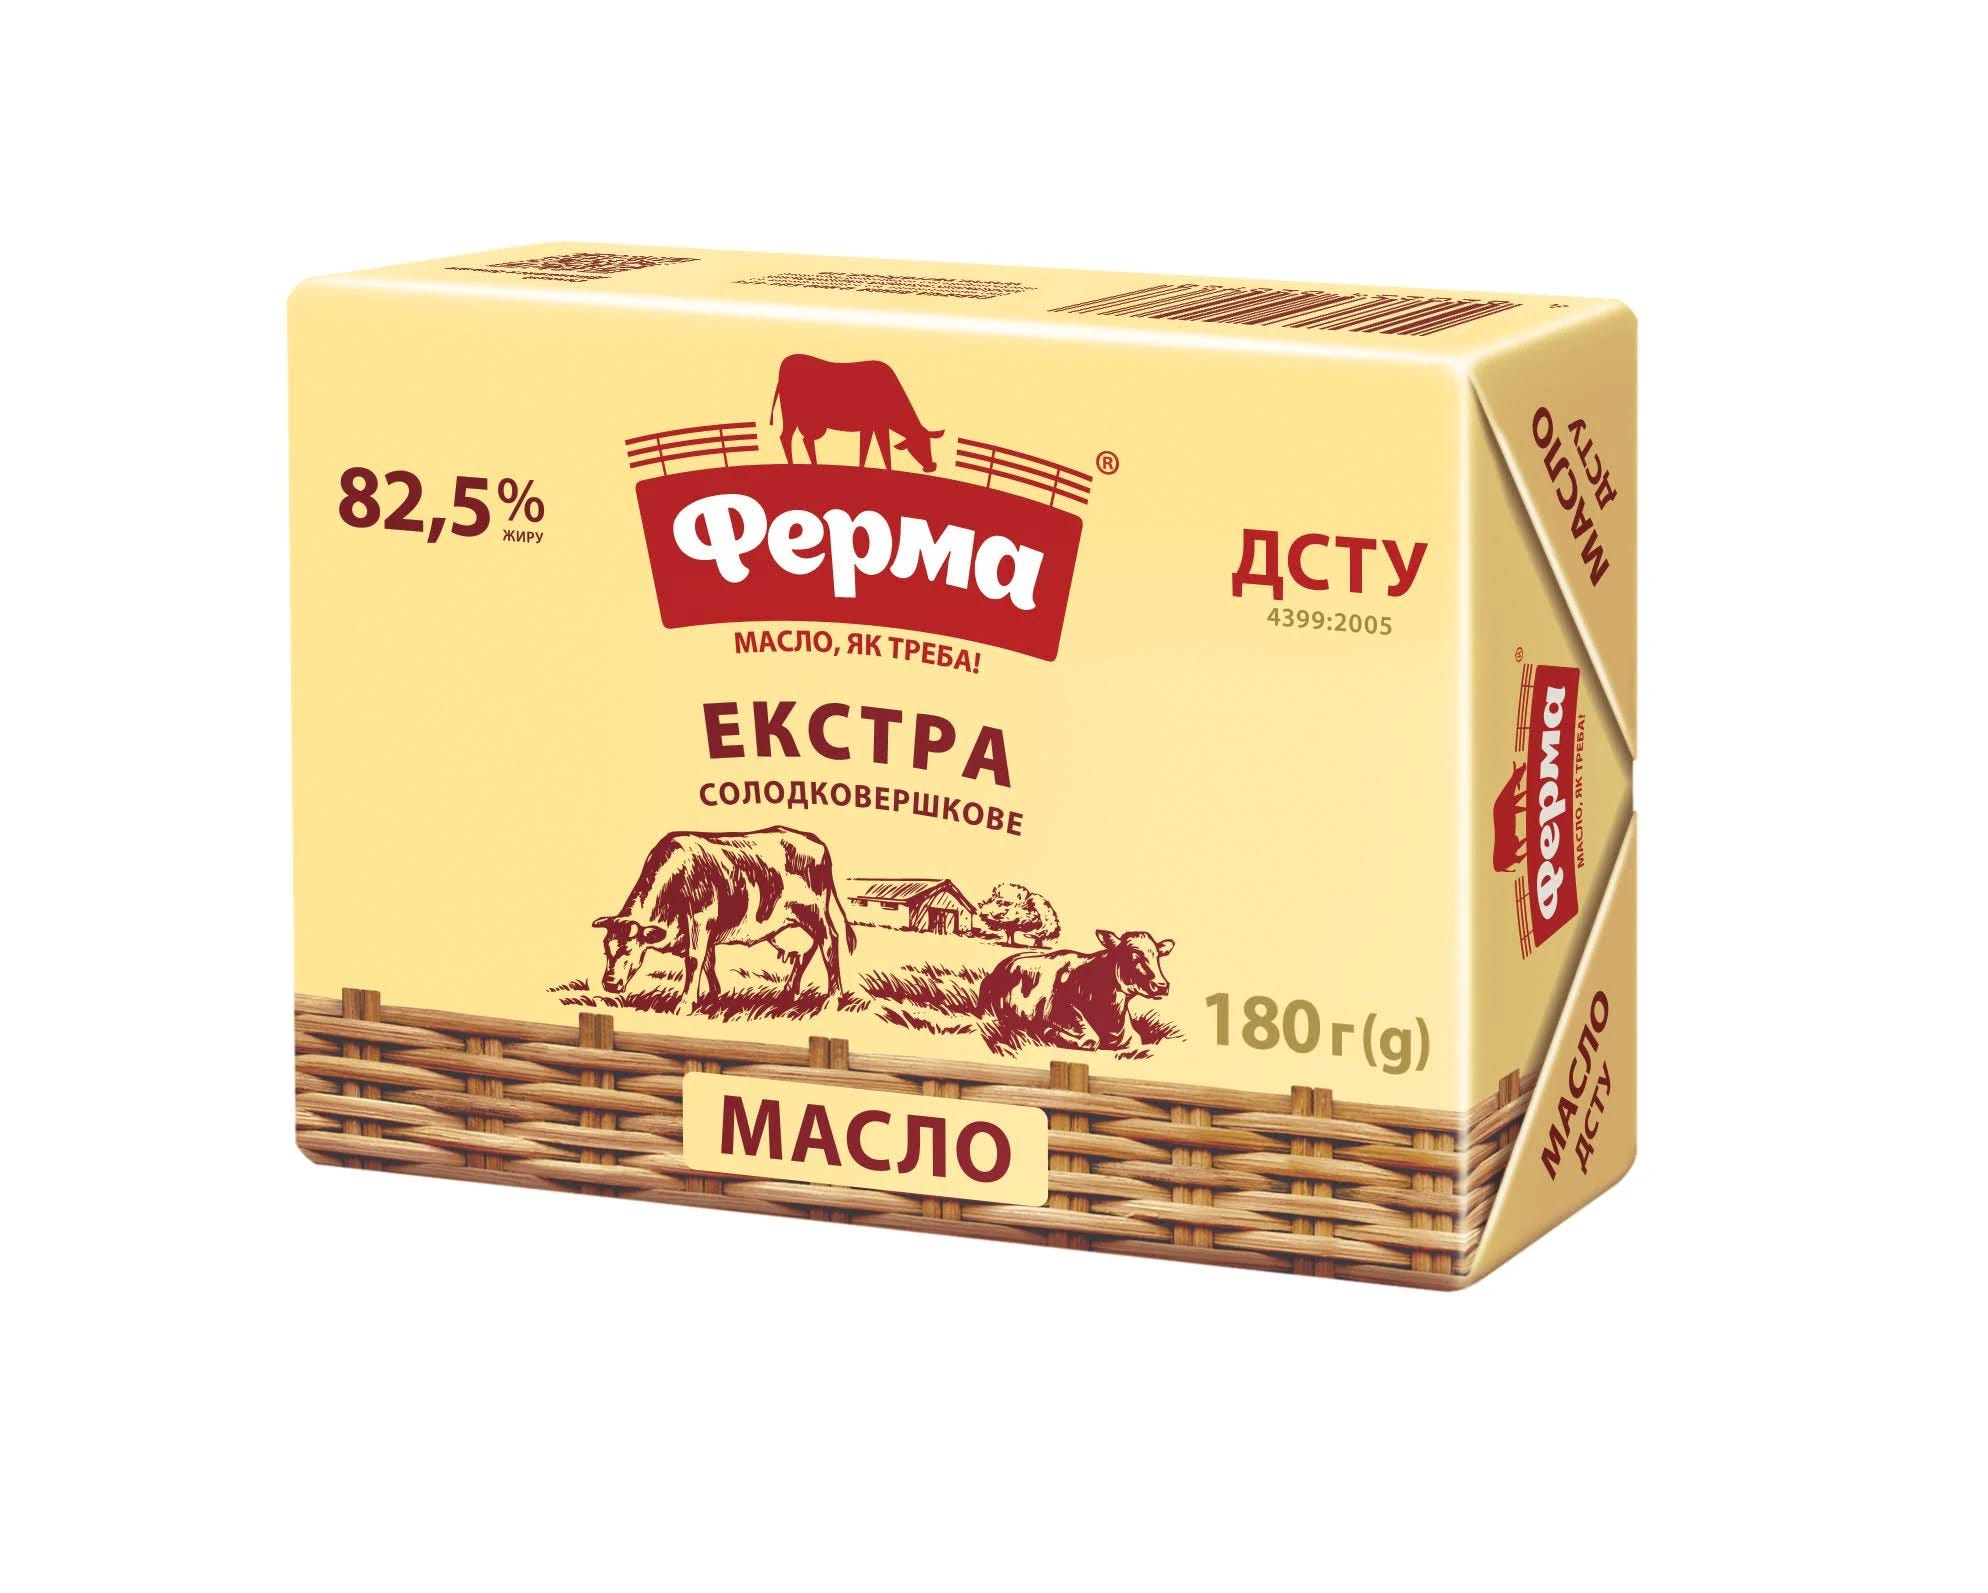 Ukrainian Ferma Butter Extra 82.5% | Image